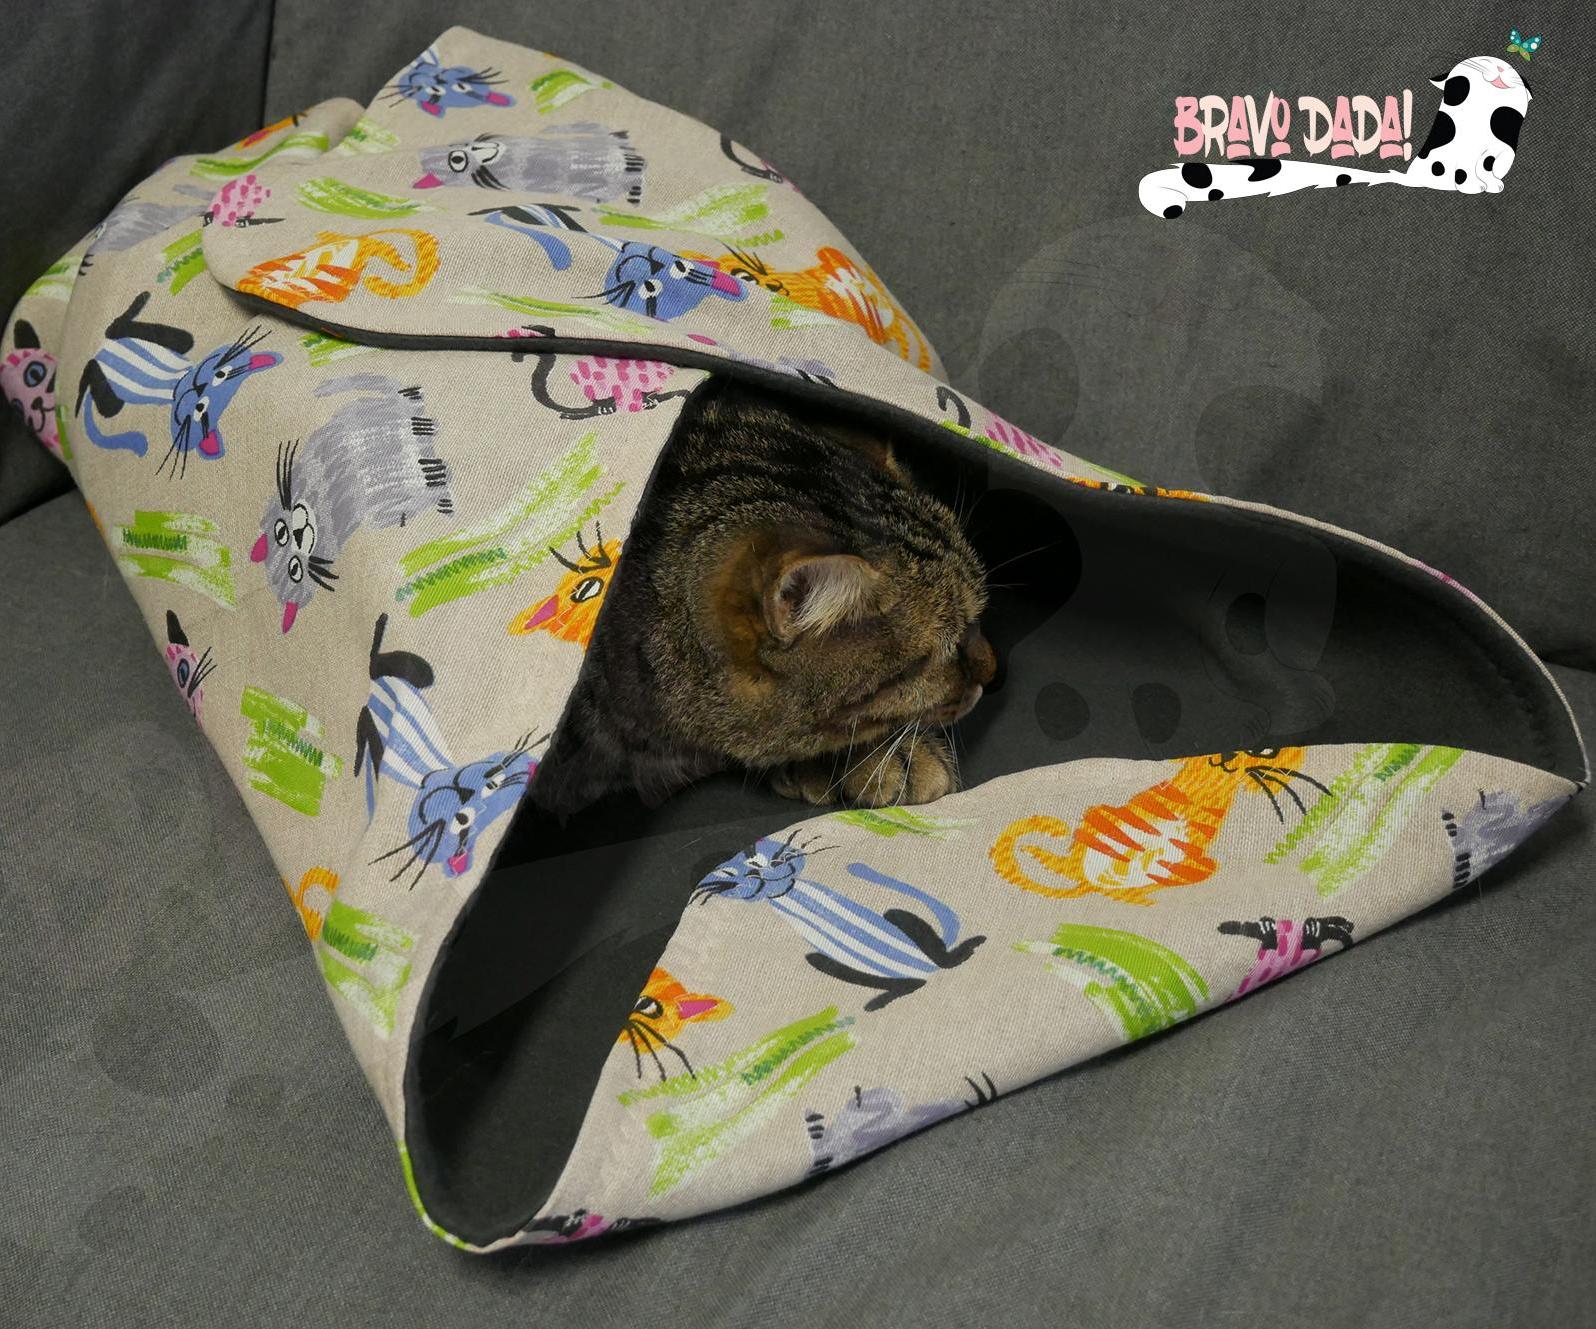 DIY How to Make a Pet Throw Blanket - Bravo Dada! Sewing Tutorial